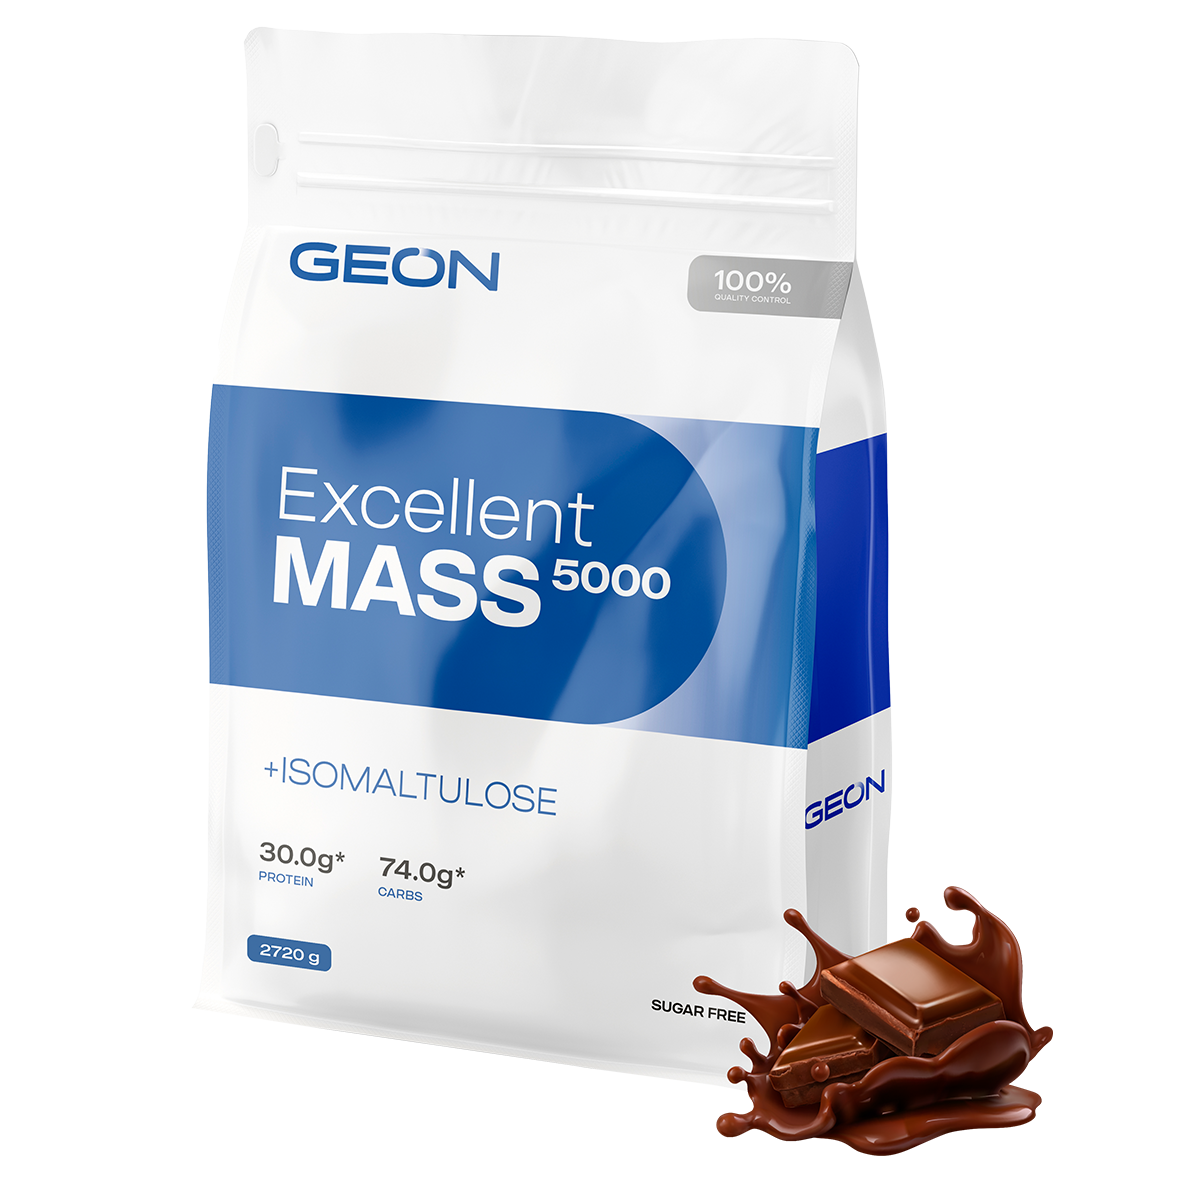 Гейнер GEON EXCELLENT MASS 5000 Шоколад, 25% белка 2720 грамм